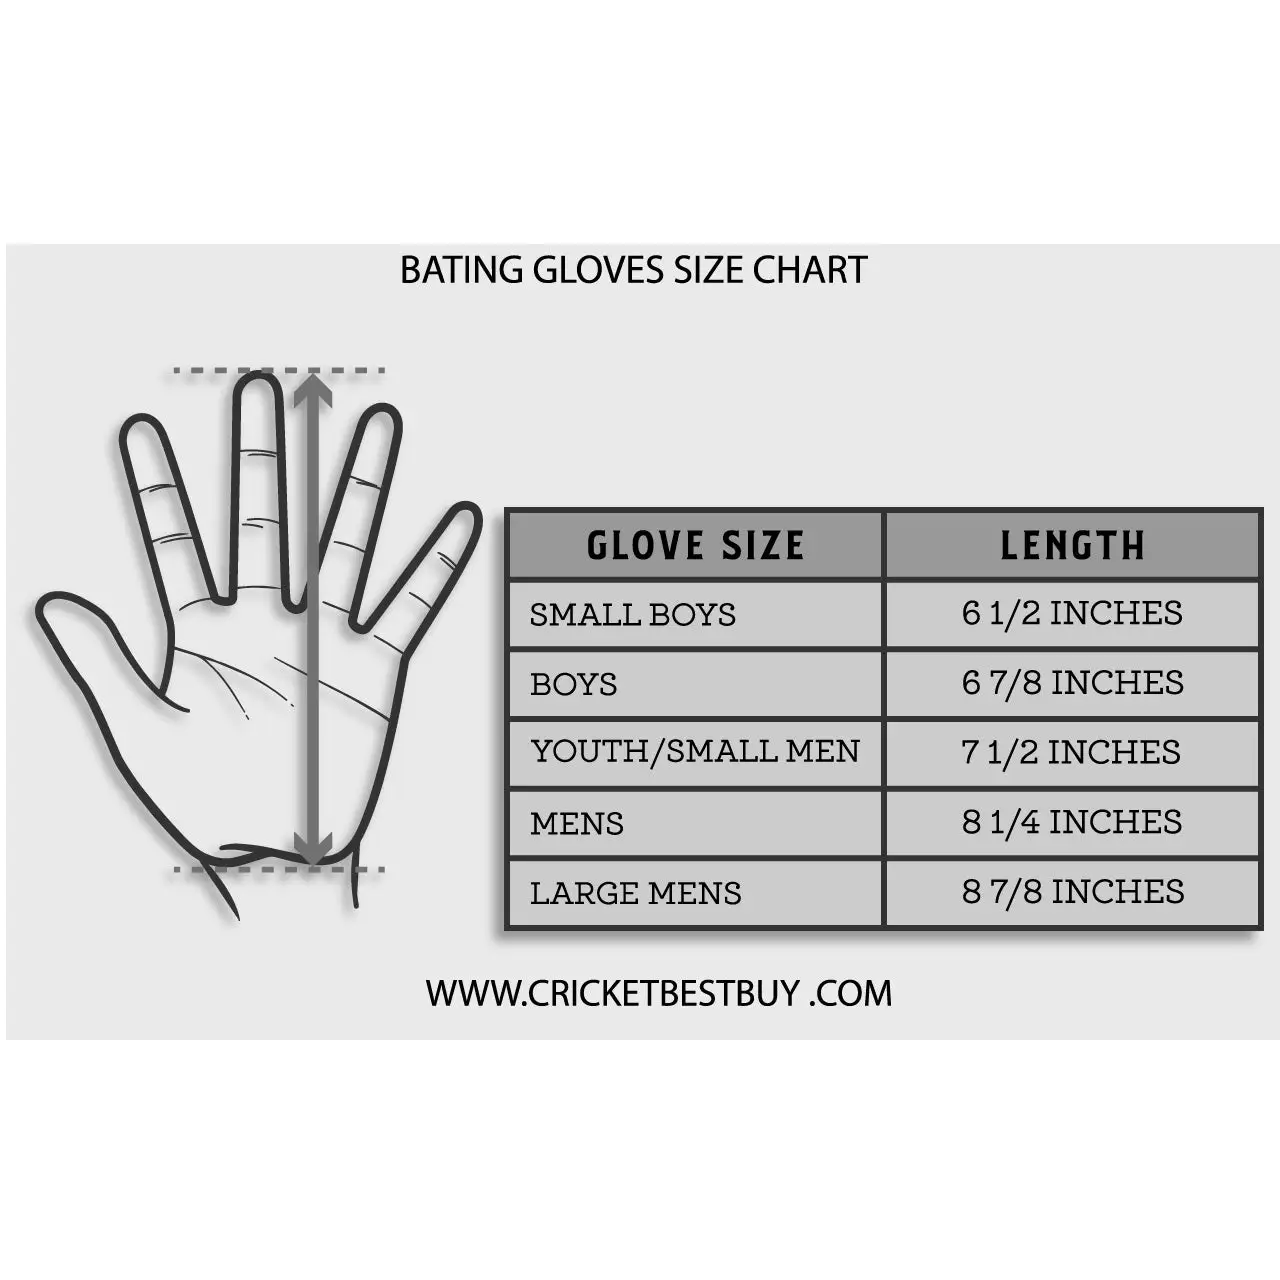 Powerbow 5 700 Cricket Gloves Gray Nicolls - GLOVE - BATTING